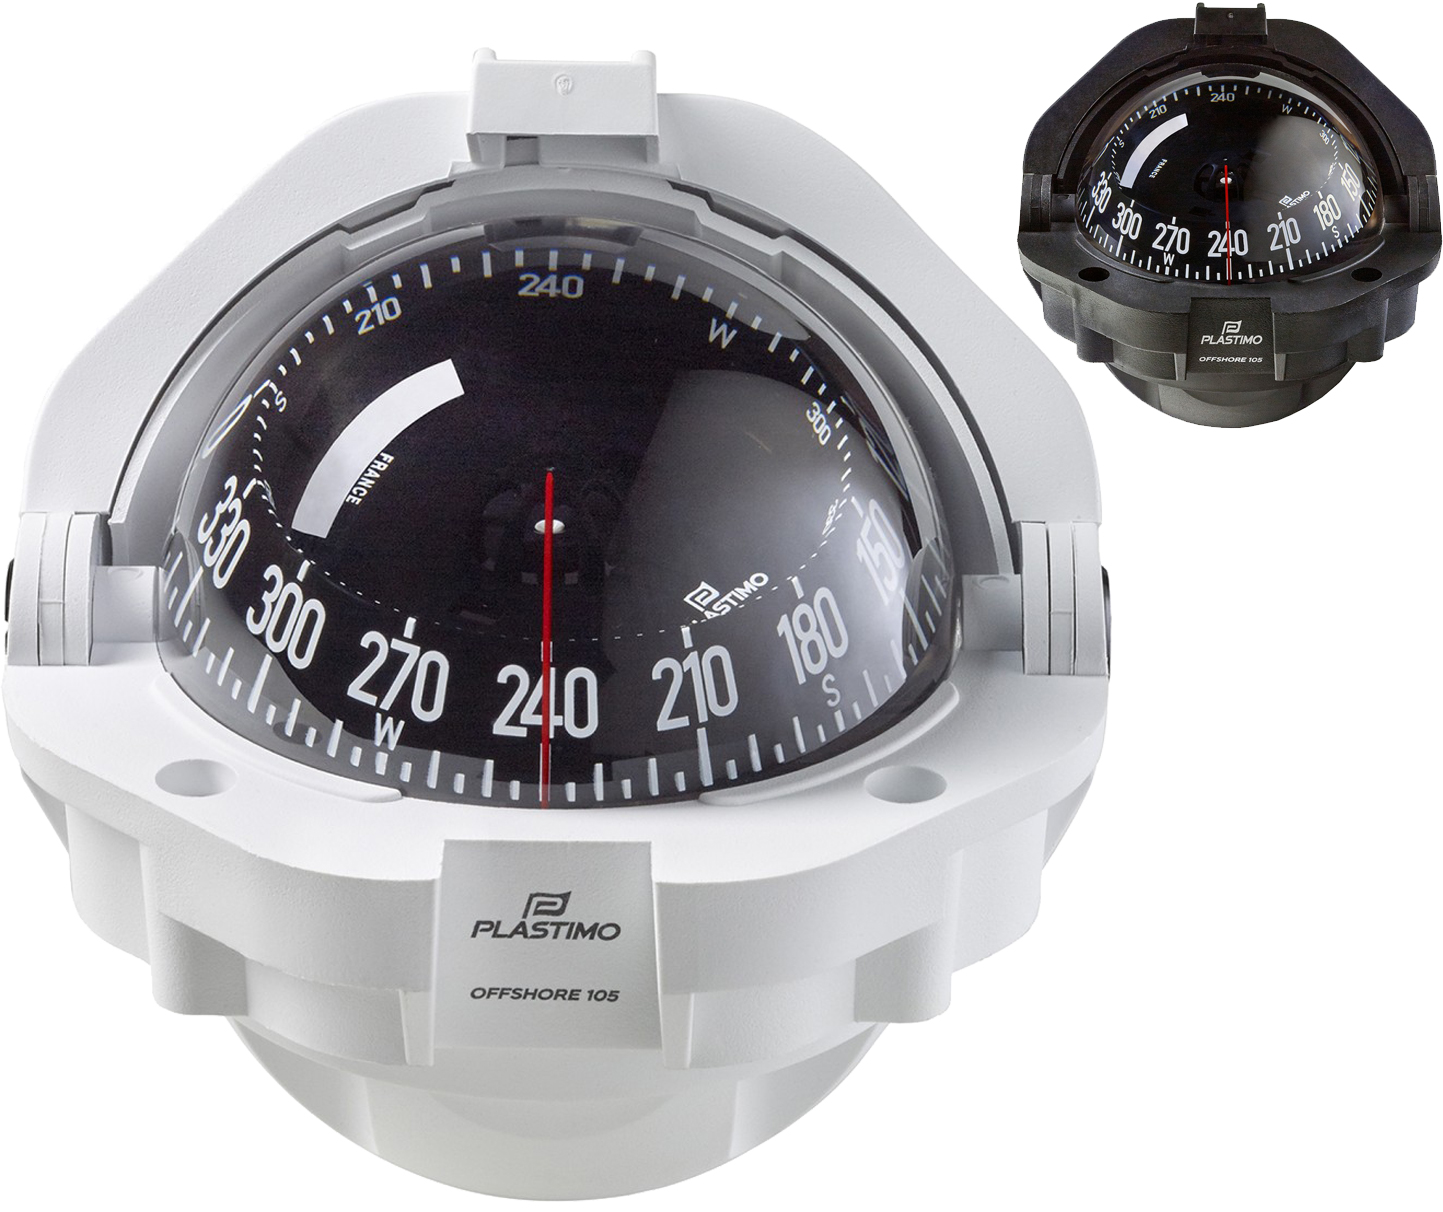 Plastimo Offshore 105 kompass